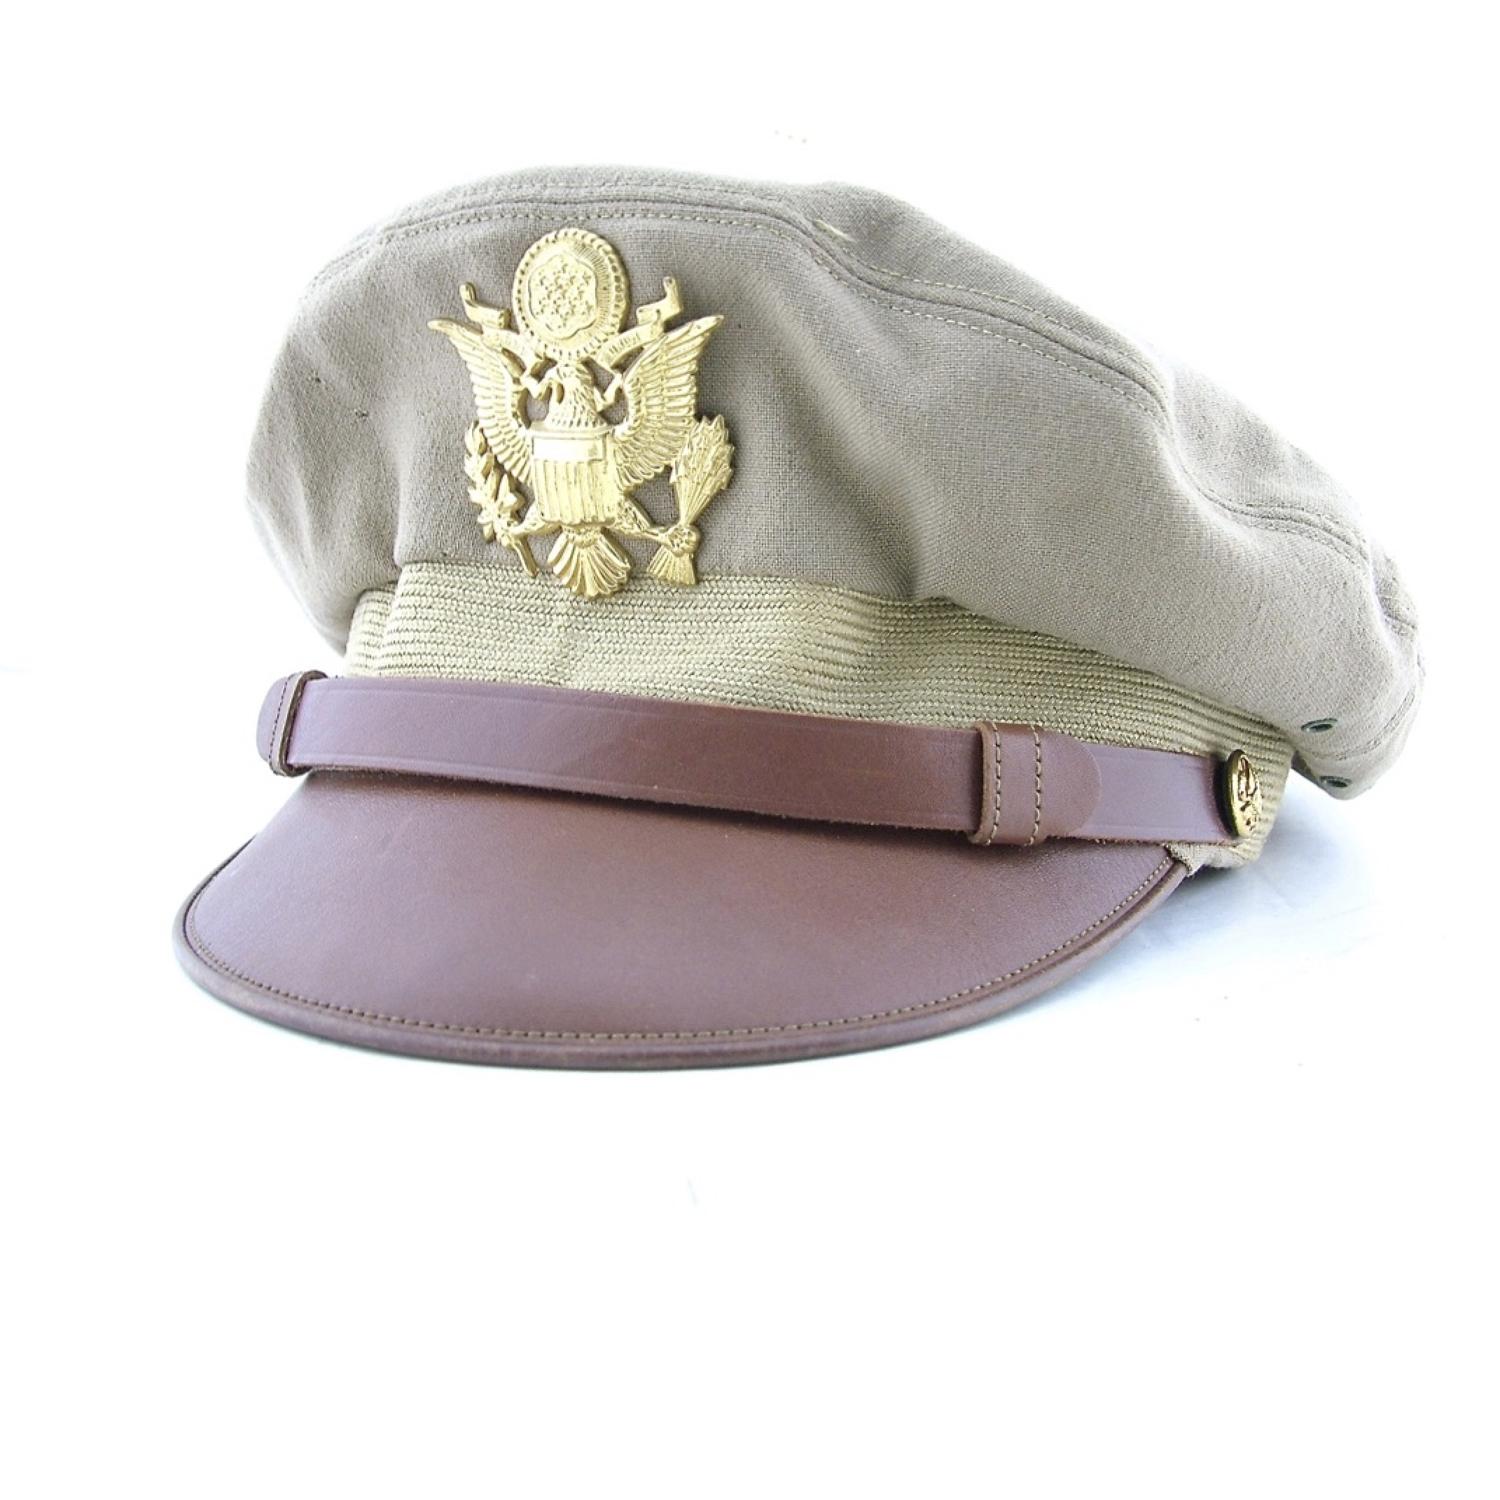 USAAF tropical Bancroft visor cap